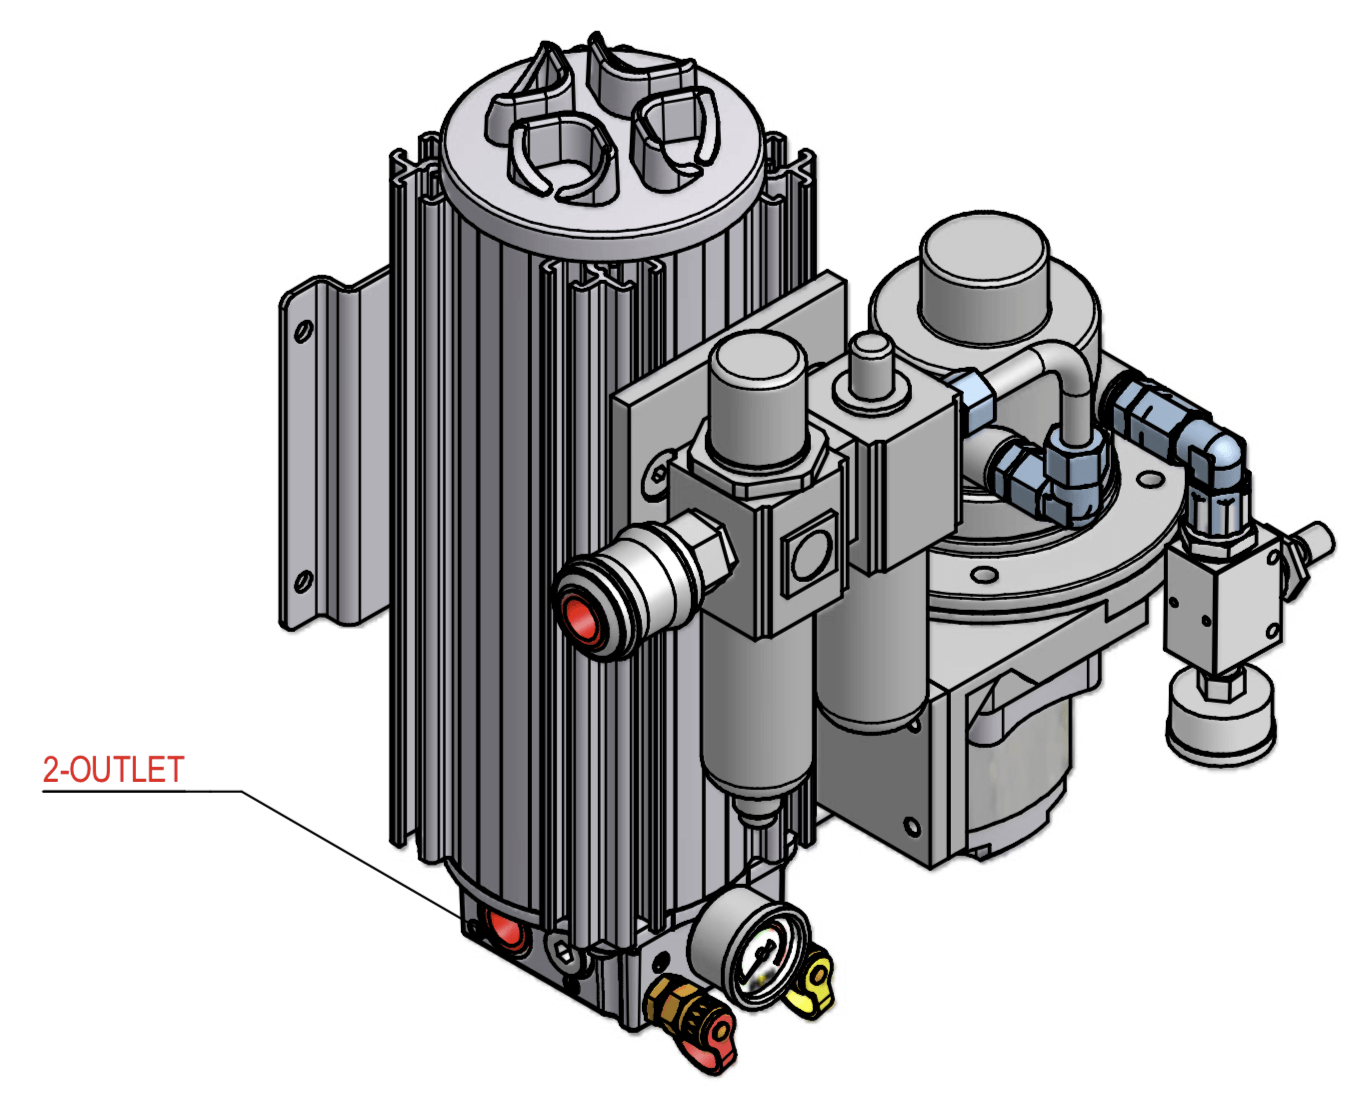 SOL-i Nebenstromölfilter Explosionsgeschützt Luftdruckantrieb RMF Systems